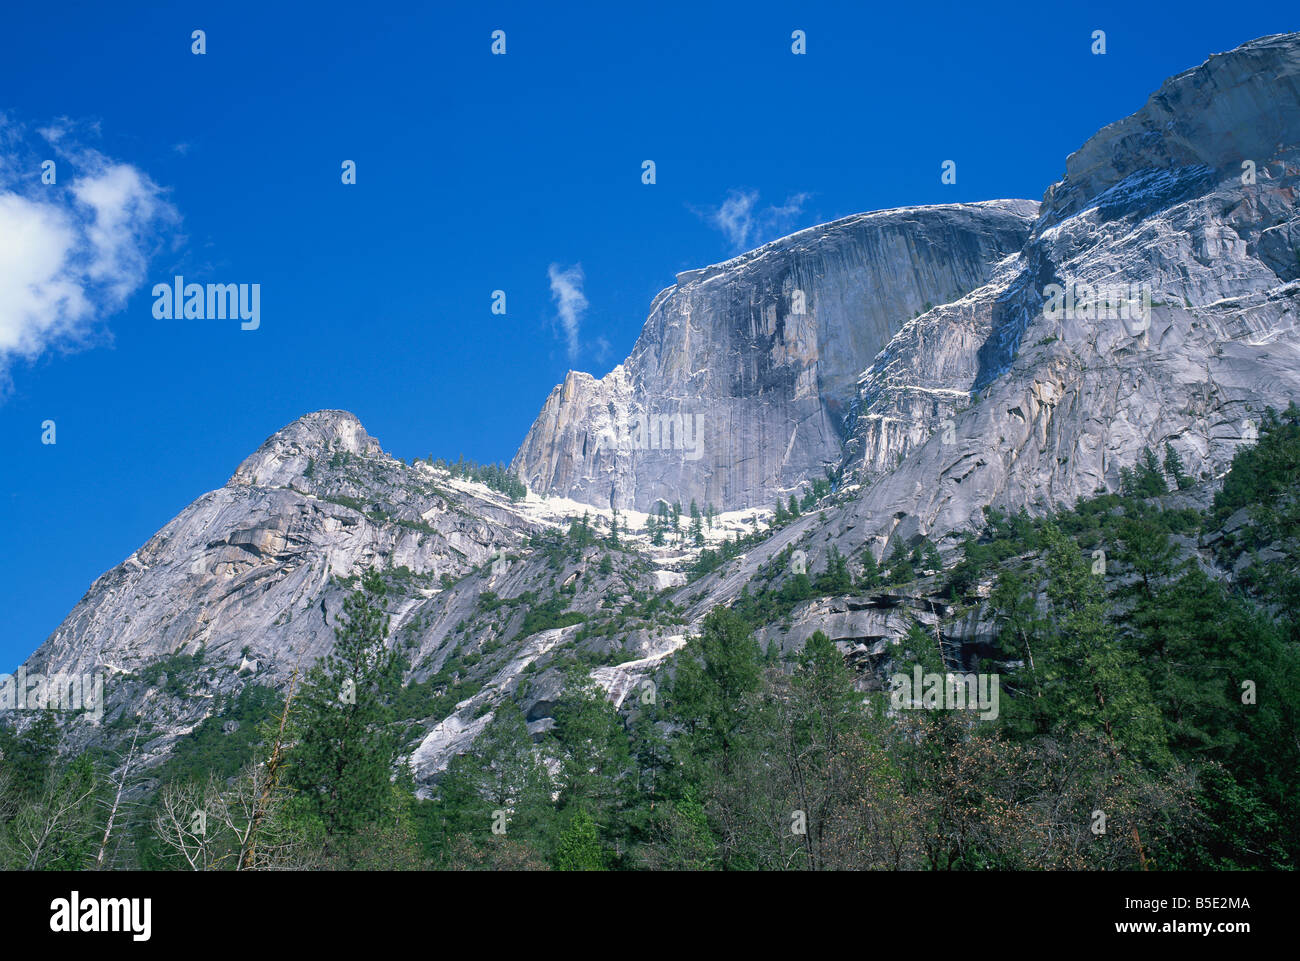 Rock walls of the Half Dome in the Yosemite National Park California USA R Rainford Stock Photo